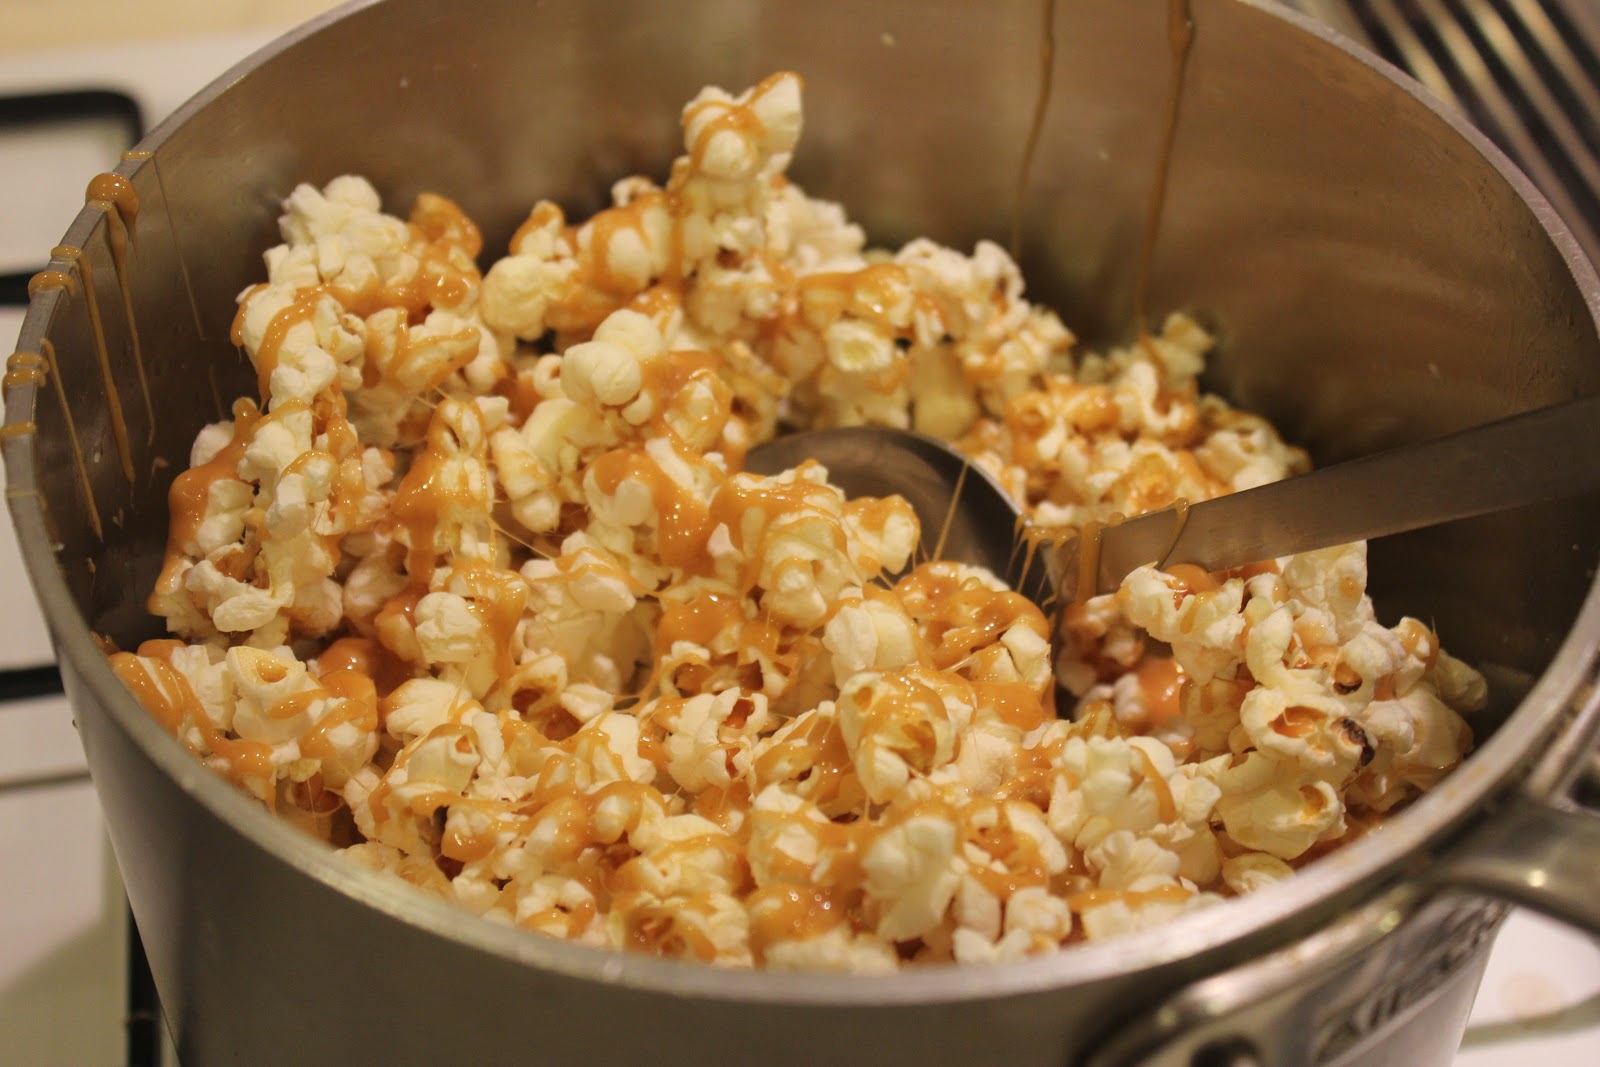 Dorm Room Dinner: National Food Day: Chili Caramel Popcorn!